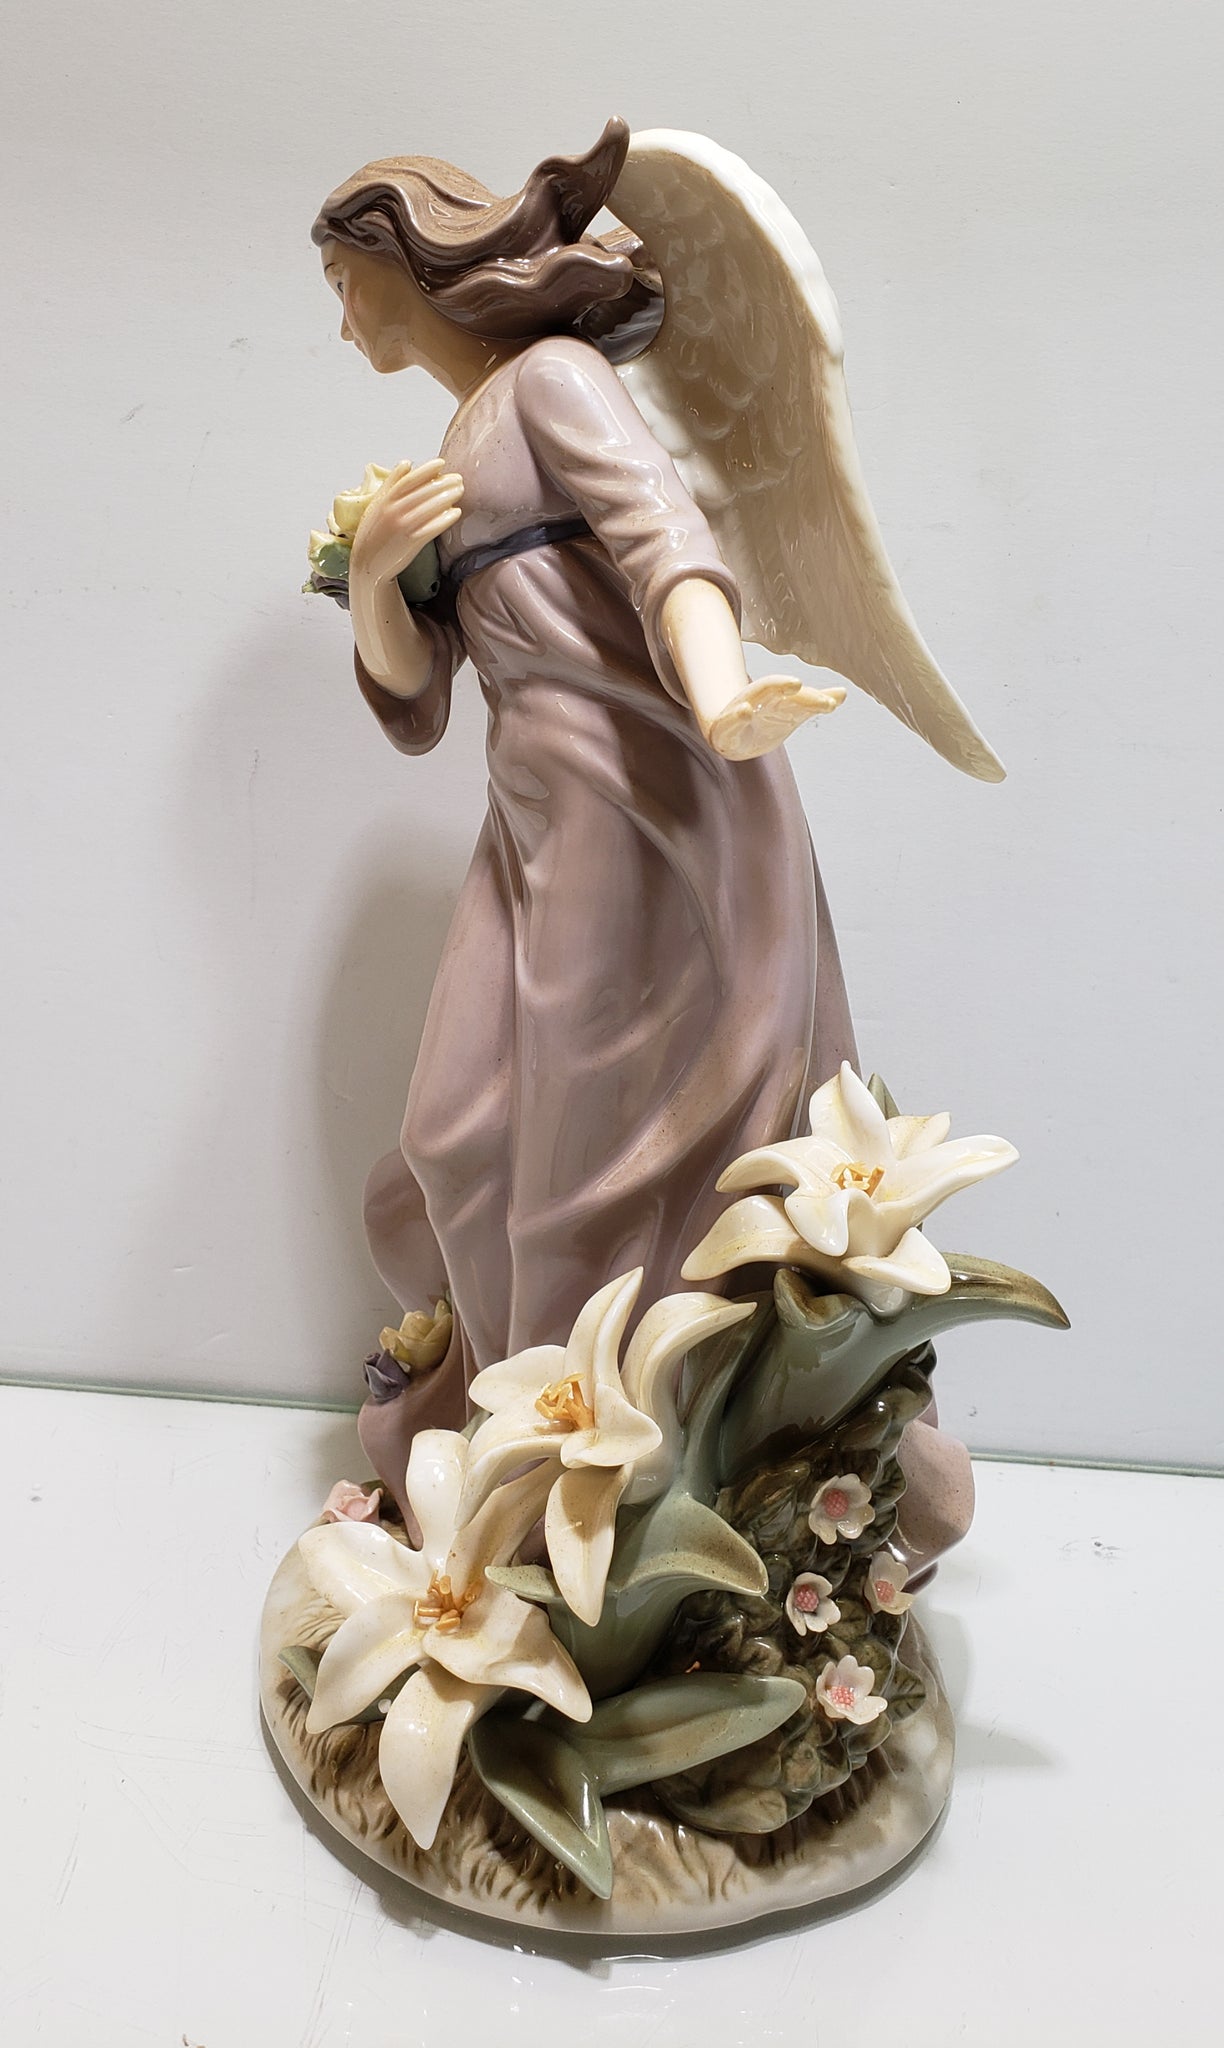 Contemporary Metallic Angel Set: Christmas Angel Figurine